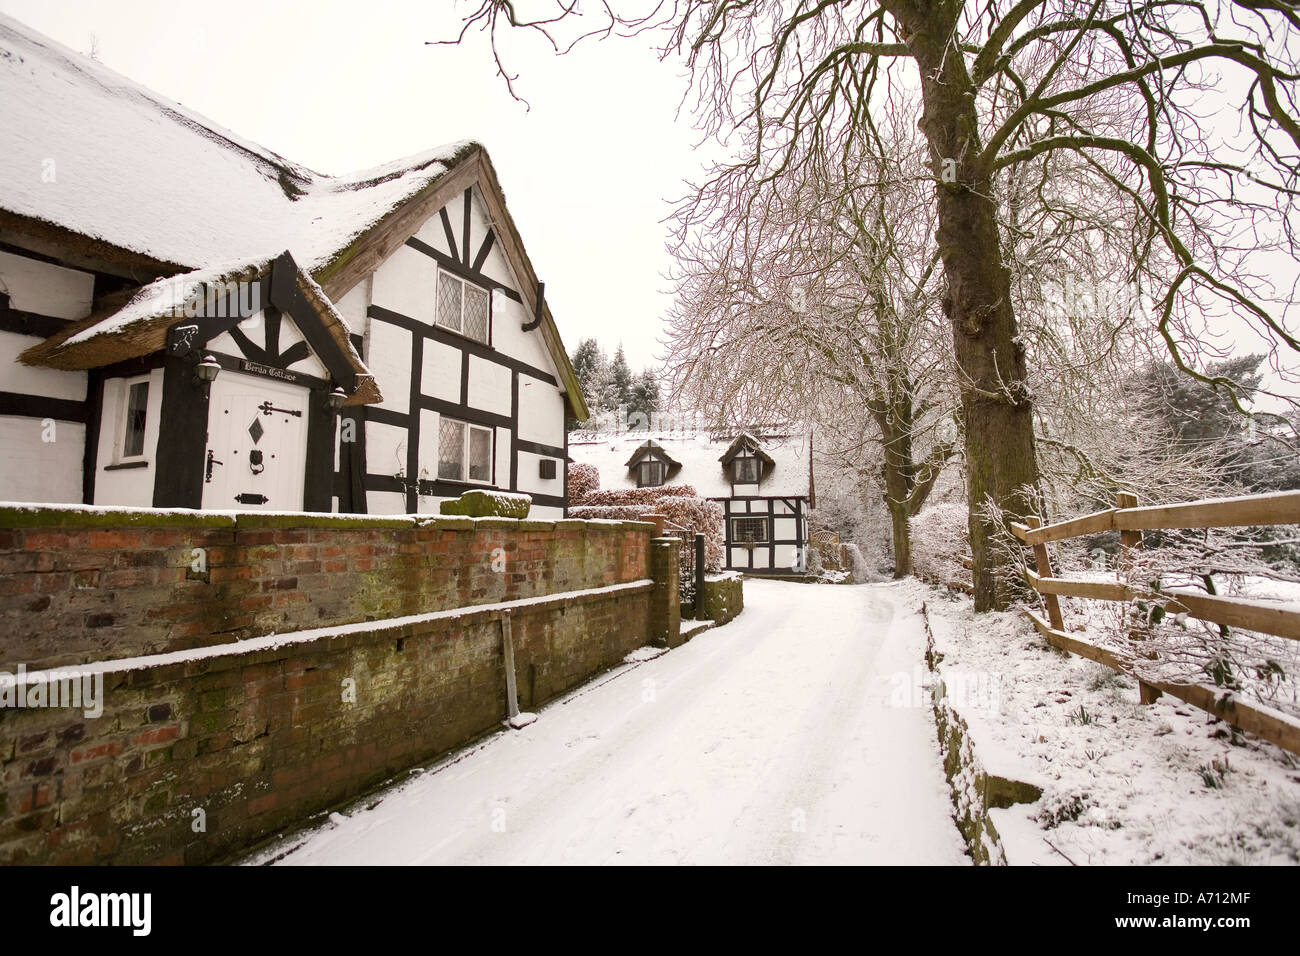 Cheshire inverno bramhall stockport Benja cottage di piegatura nella neve Foto Stock